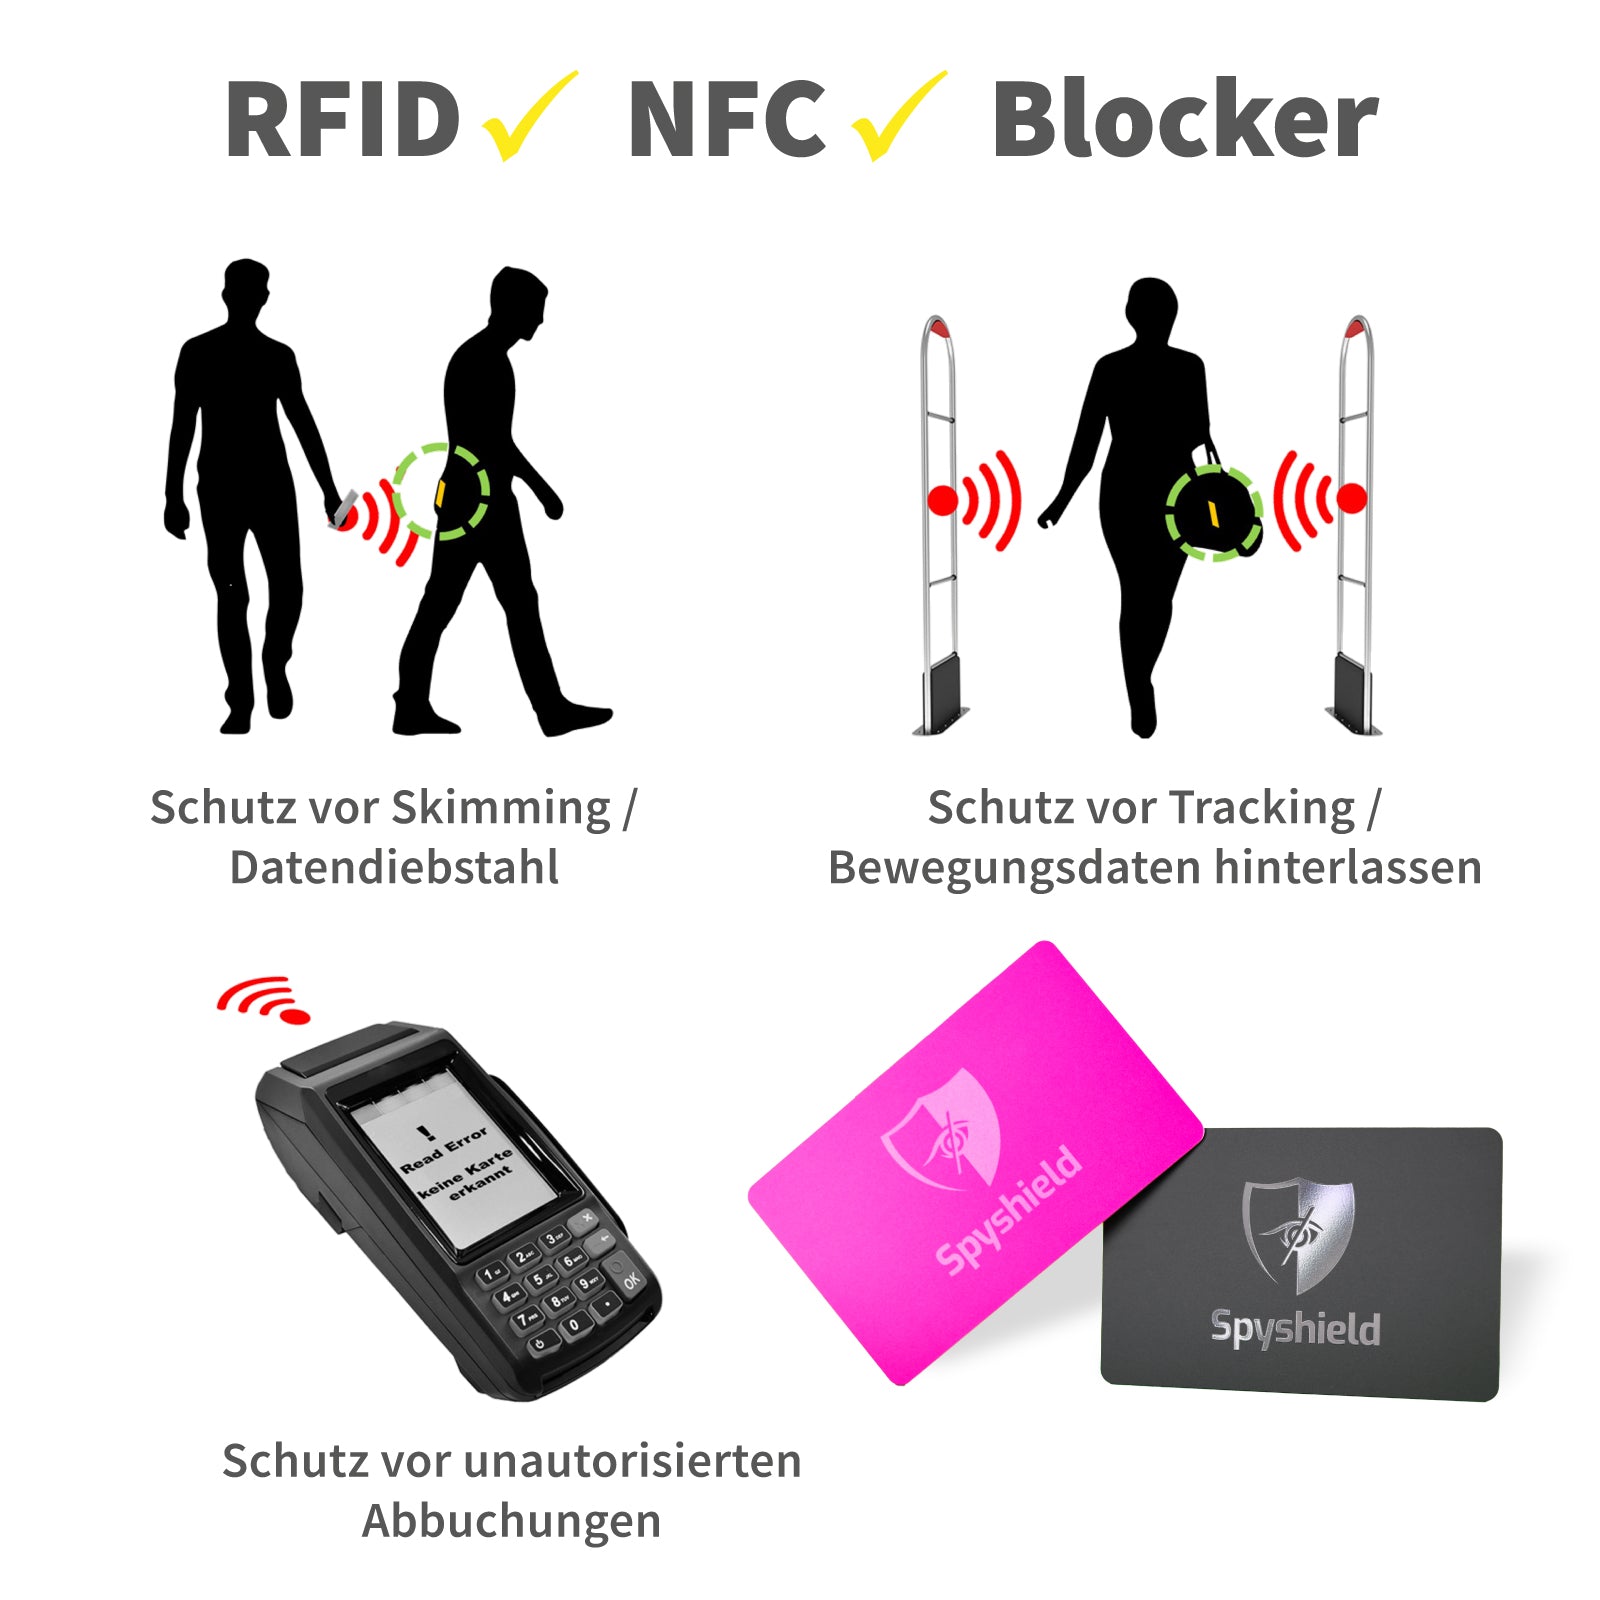 Spyshield RFID blocking card - functions